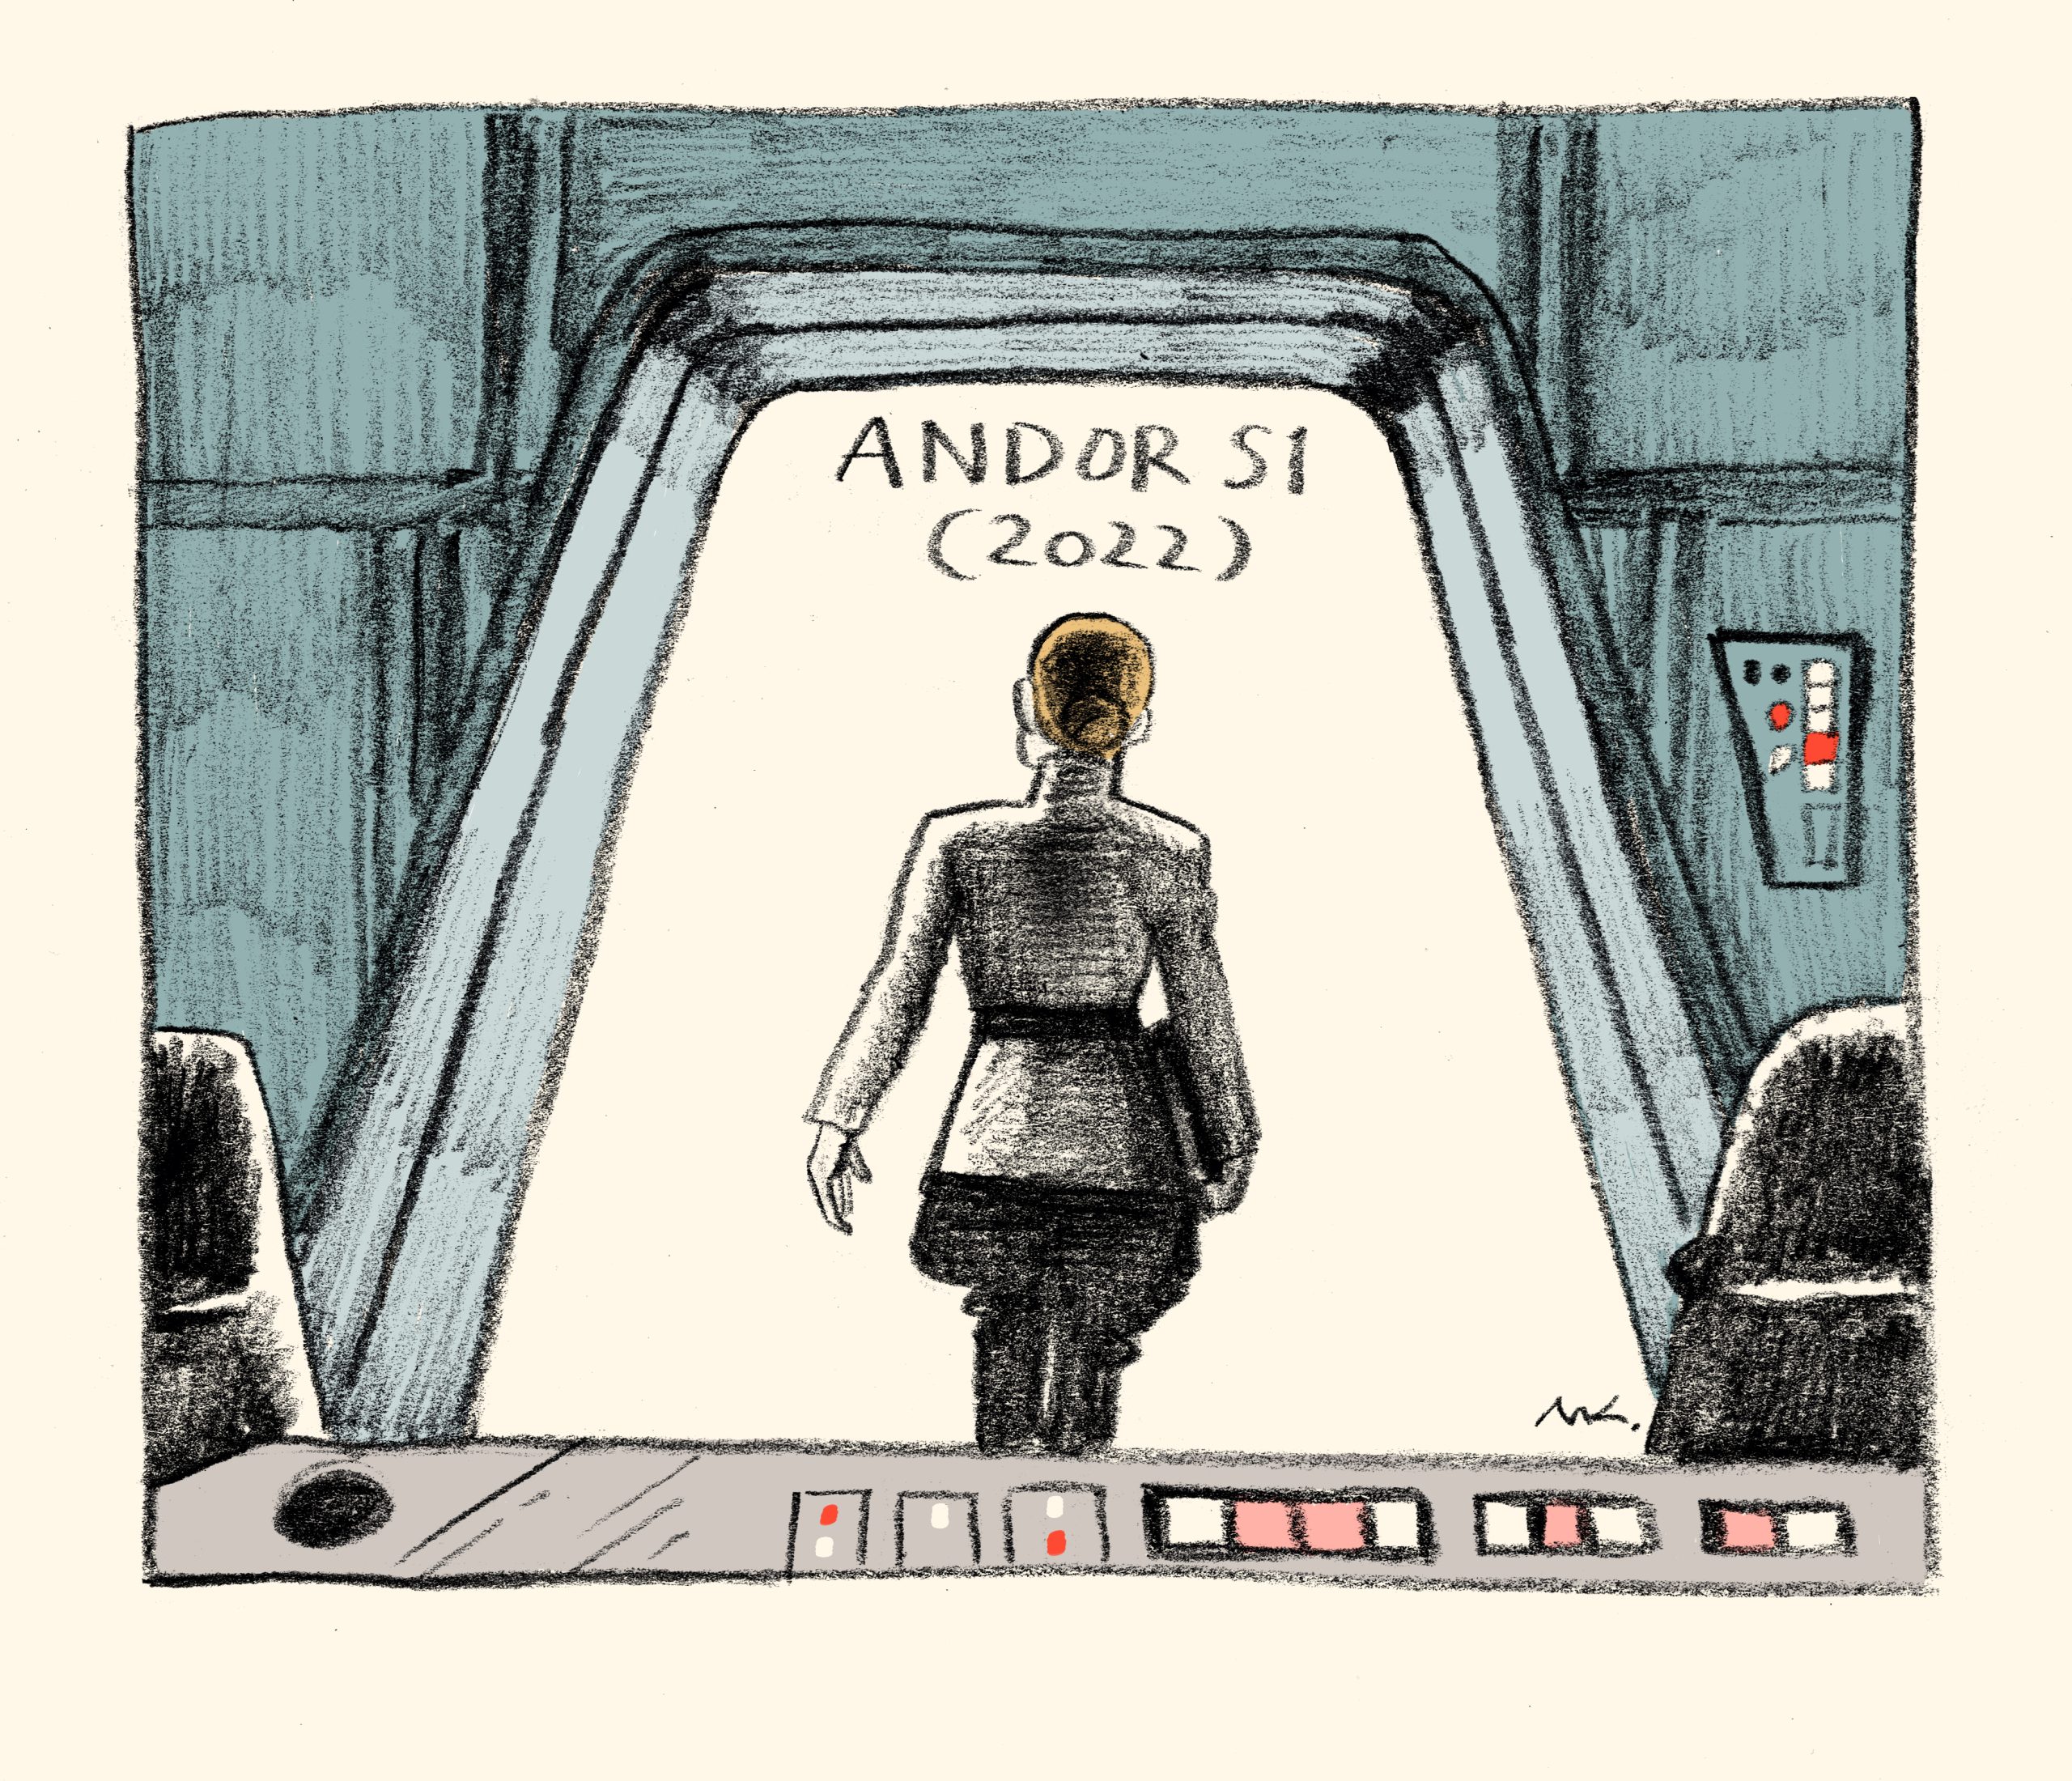 Andor S1 (2022)